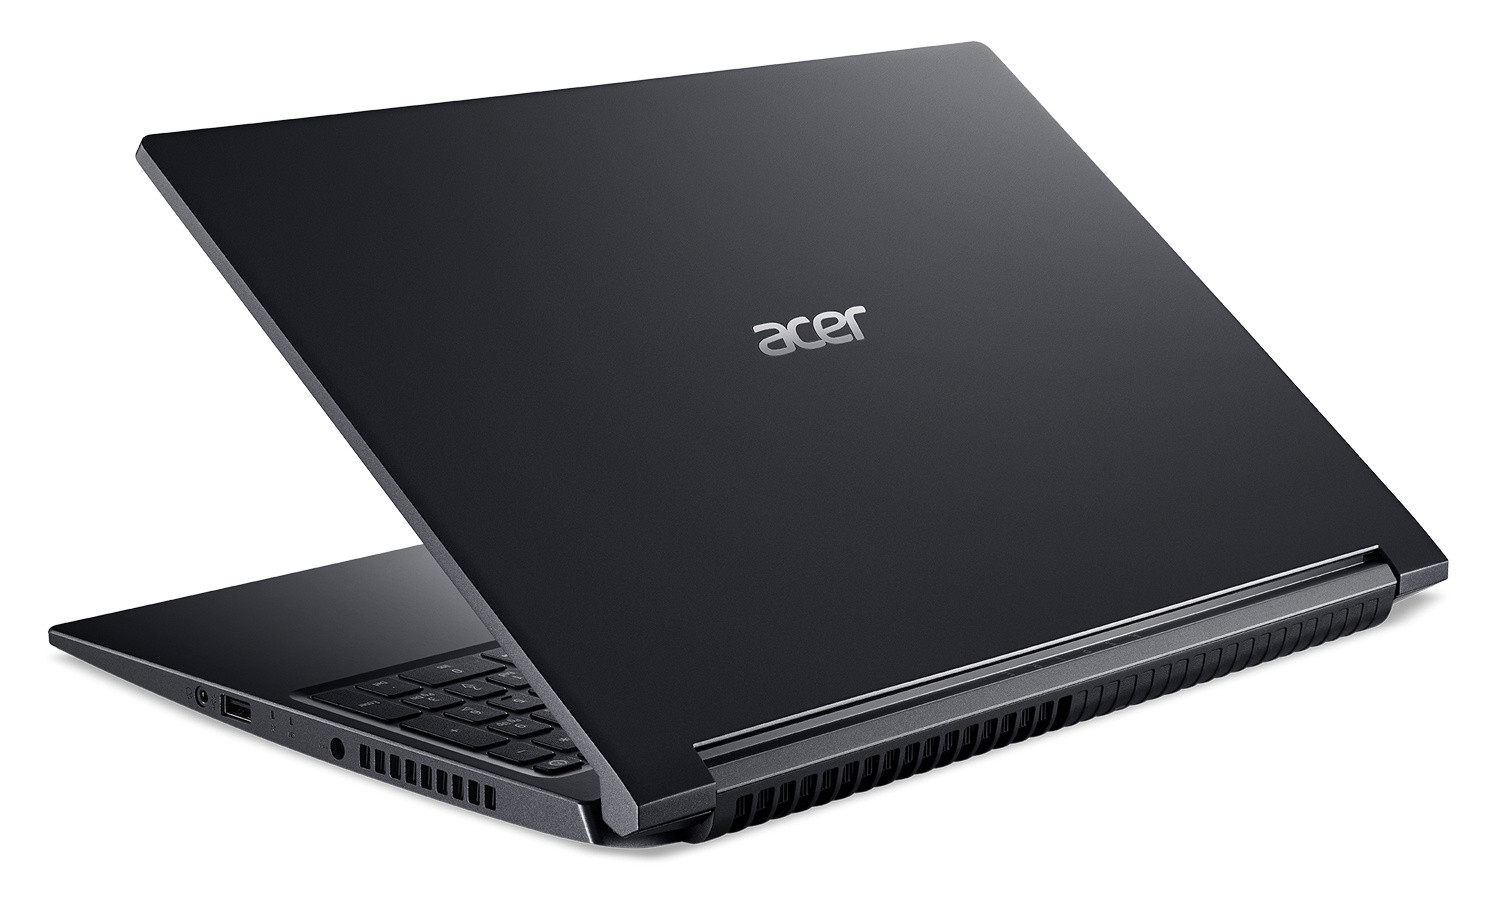 Acer Aspire 7 A715-75G-529J (Intel Core i5-10300H/15.6"/1920x1080 IPS/8GB/256GB SSD/DVD нет/Nvidia GF GTX1650Ti 4Gb/Wi-Fi/Bluetooth/DOS) NH.Q9AER.006